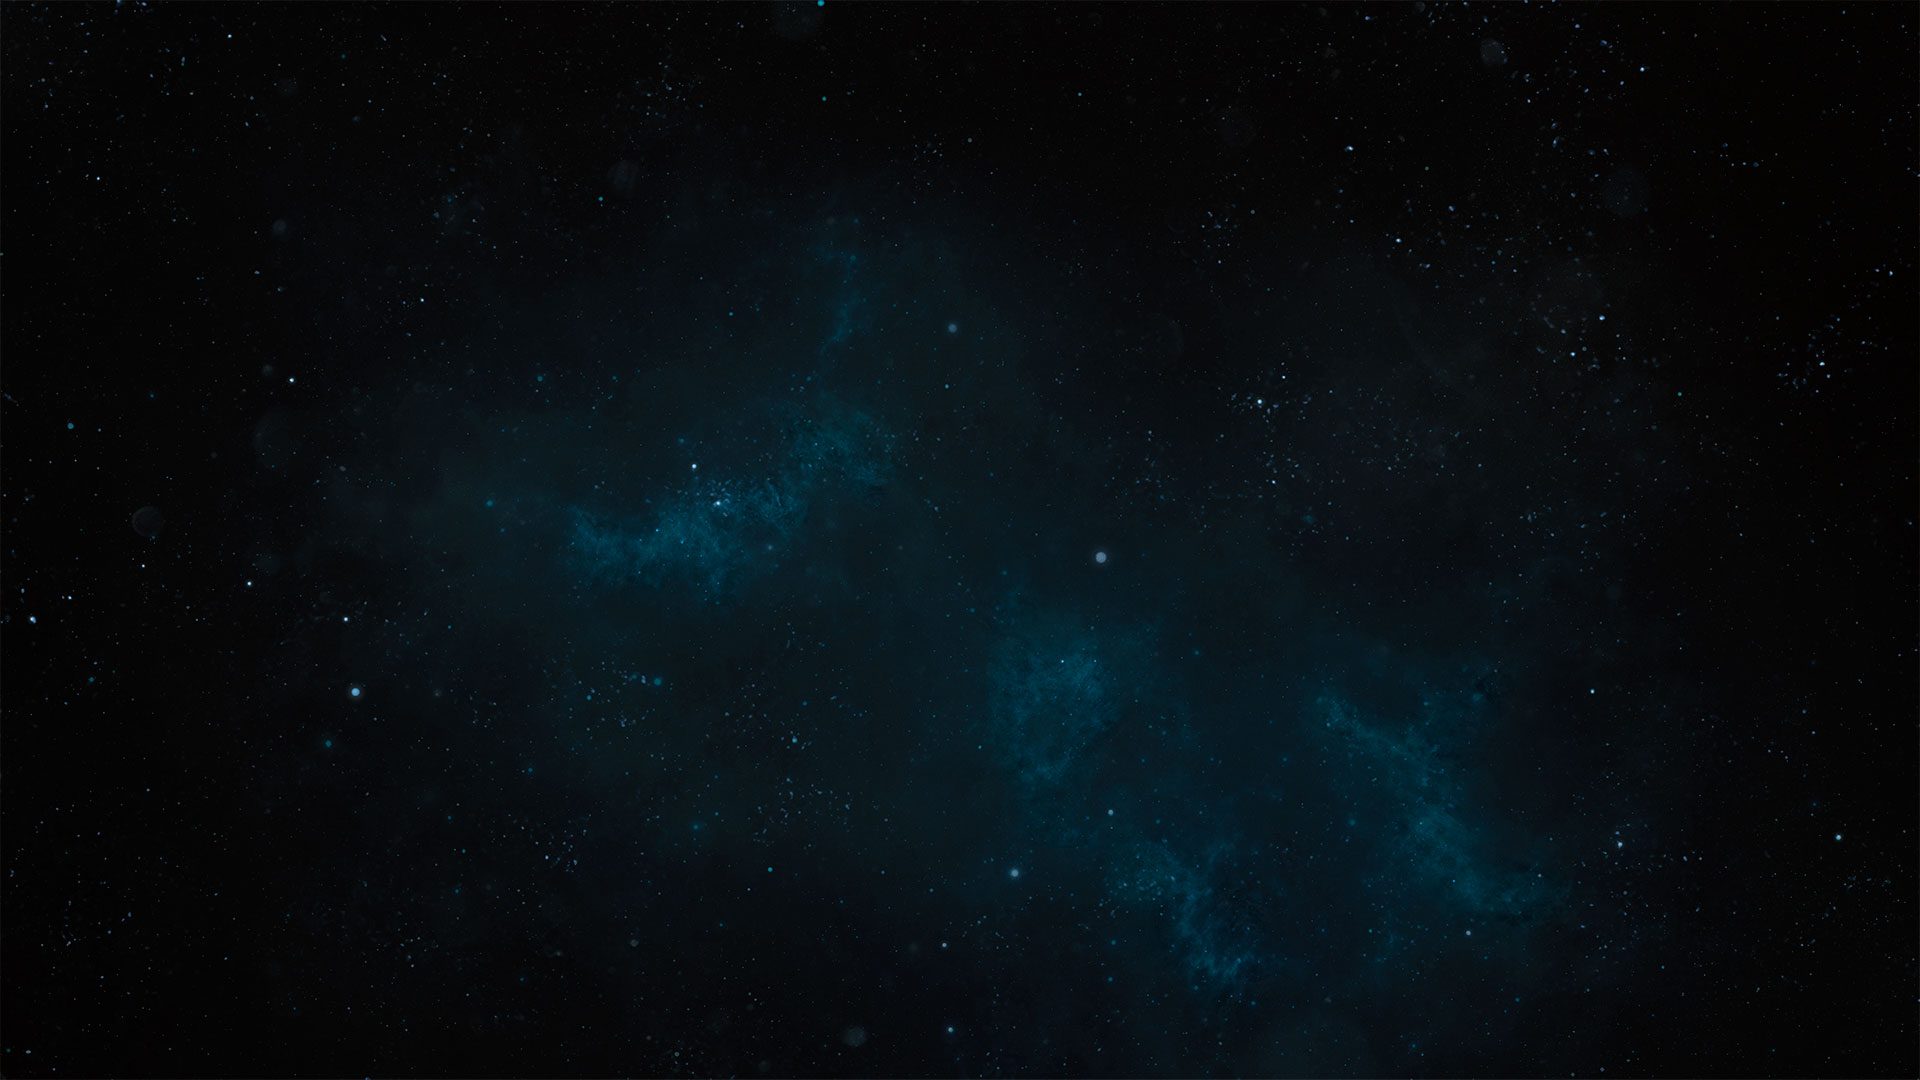 Mass Effect Background